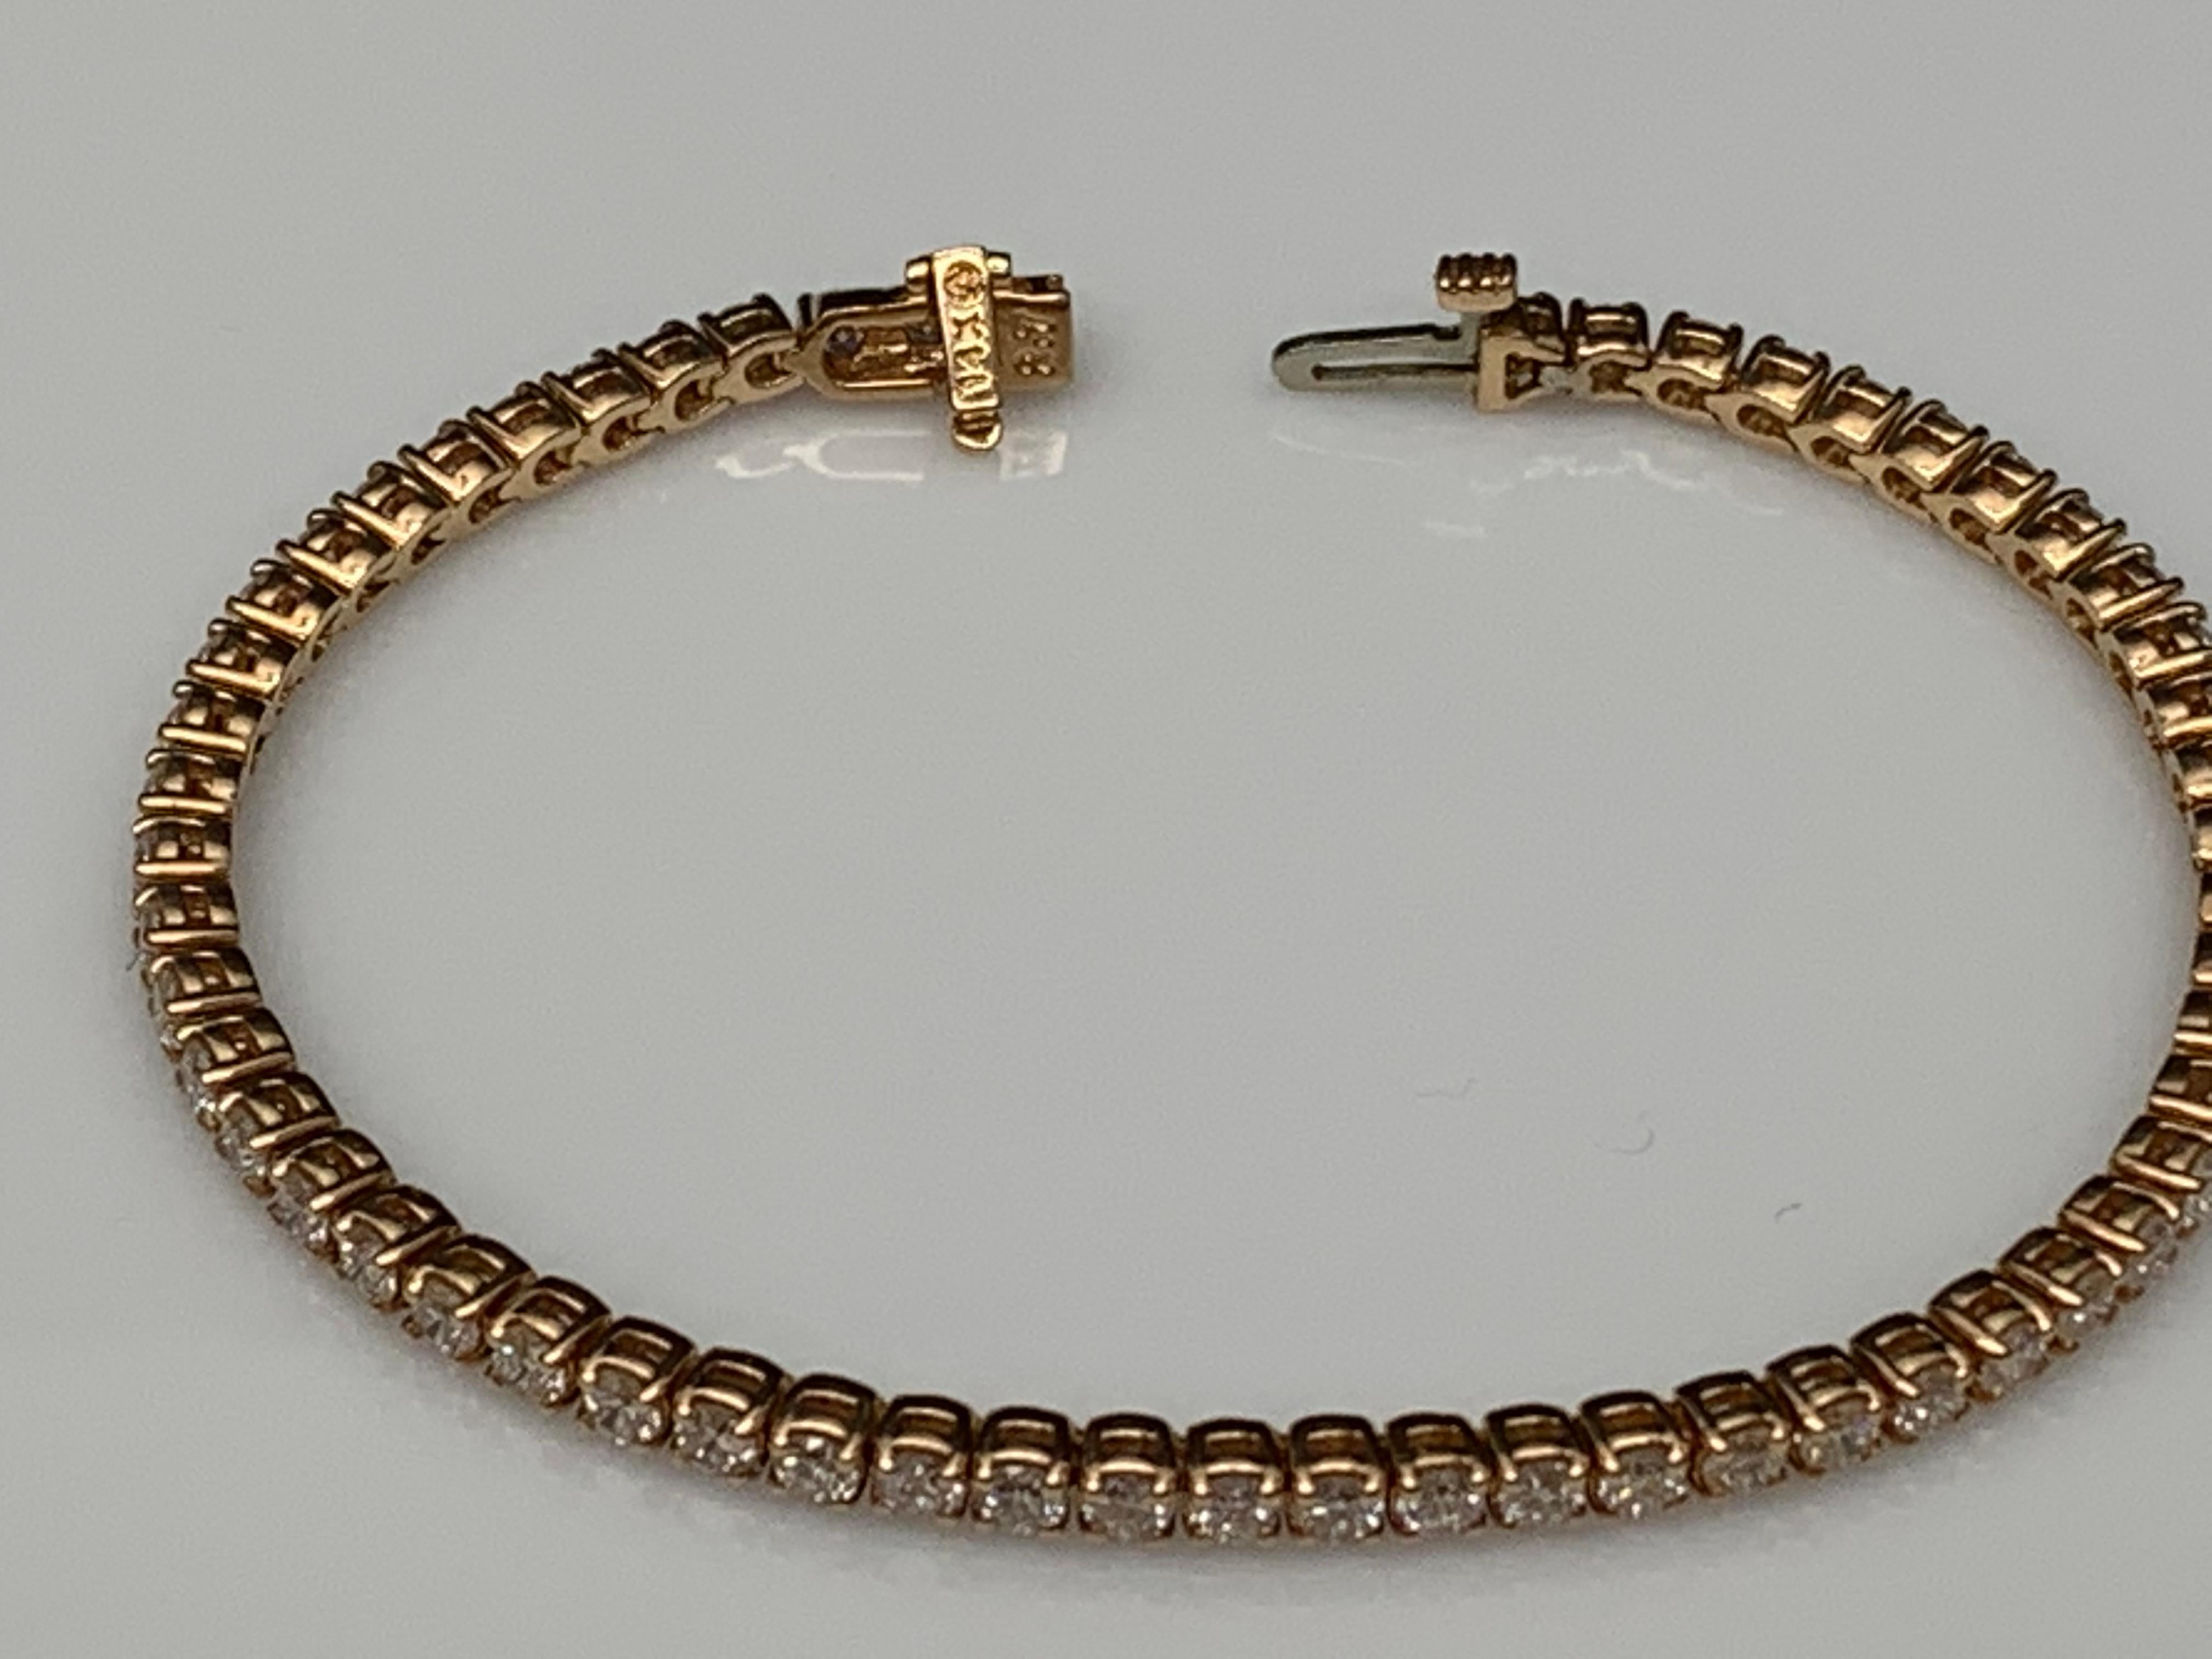 4.01 Carat Brilliant Cut Round Diamond Tennis Bracelet in 14K Rose Gold For Sale 6